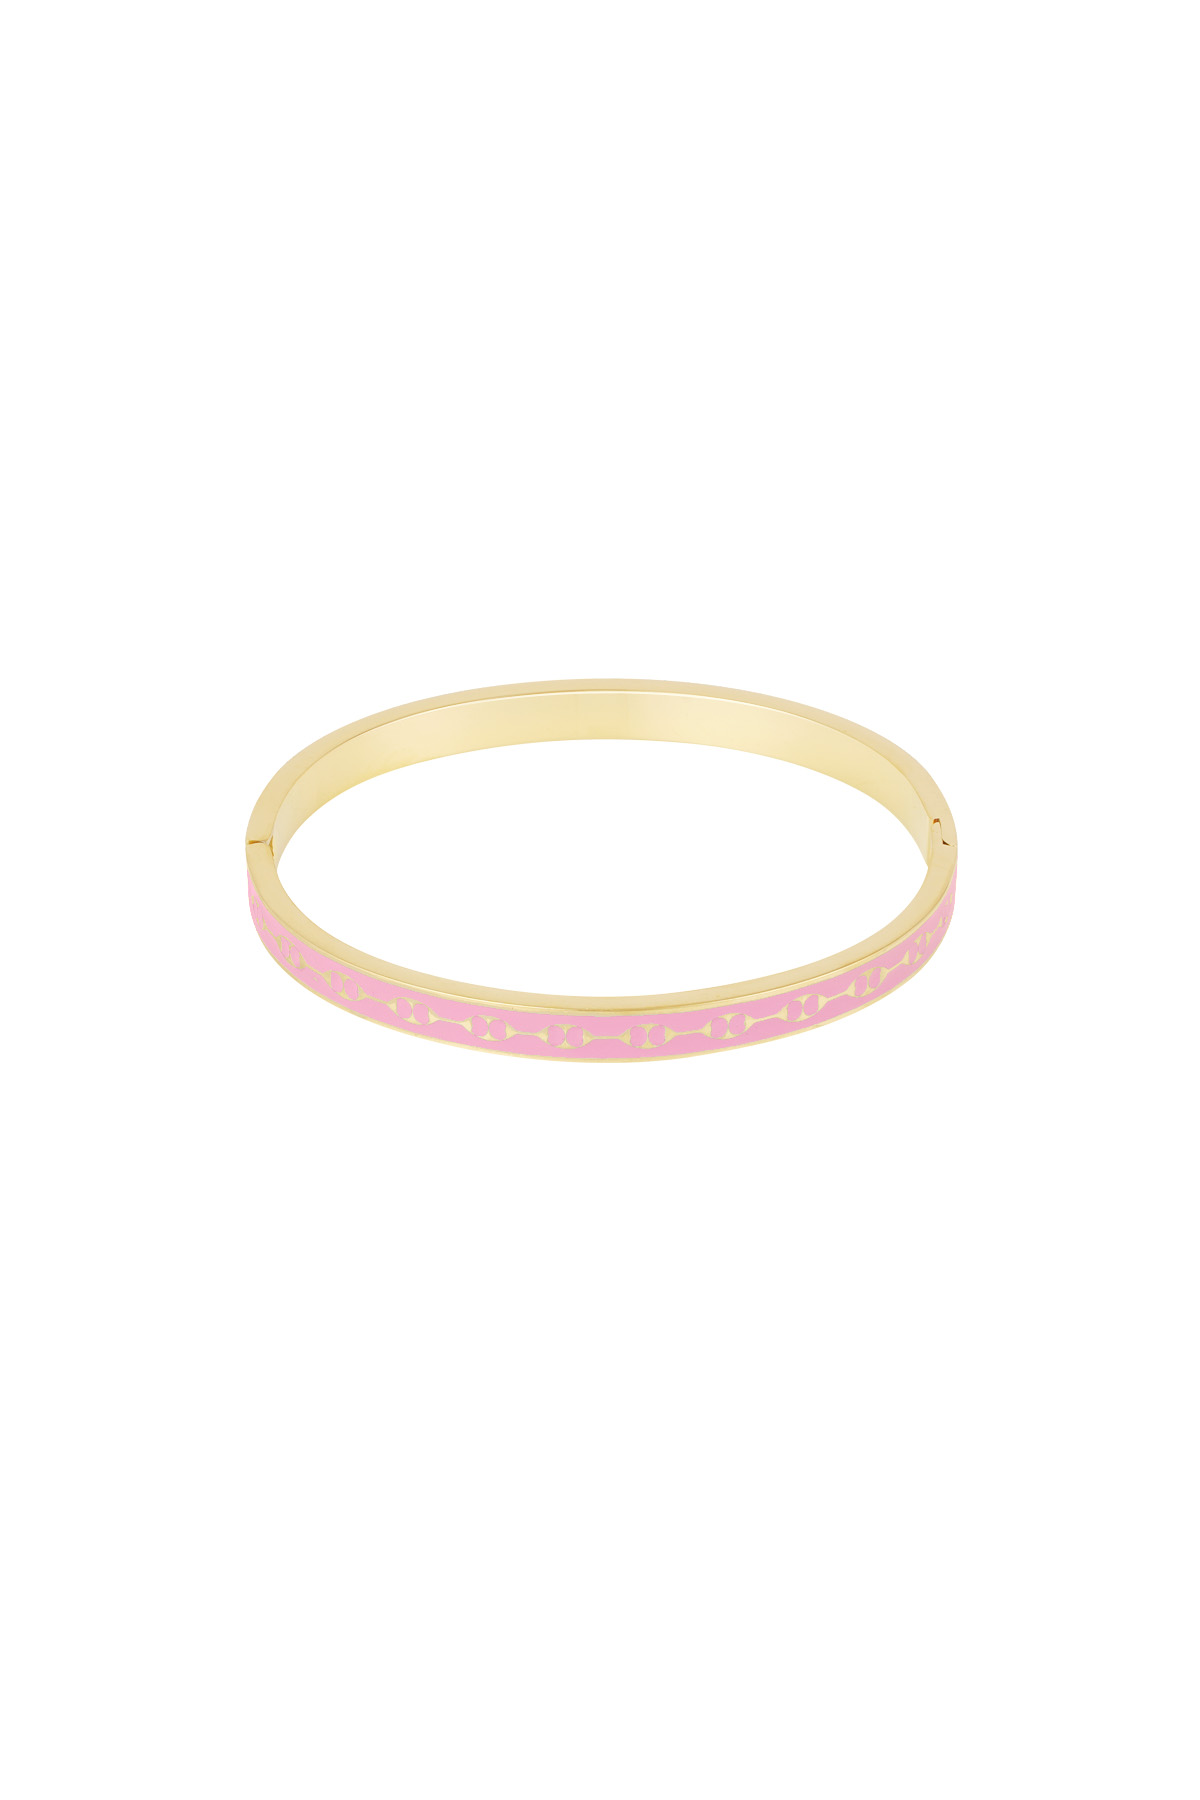 Slave bracelet with colorful print - pink/gold  h5 